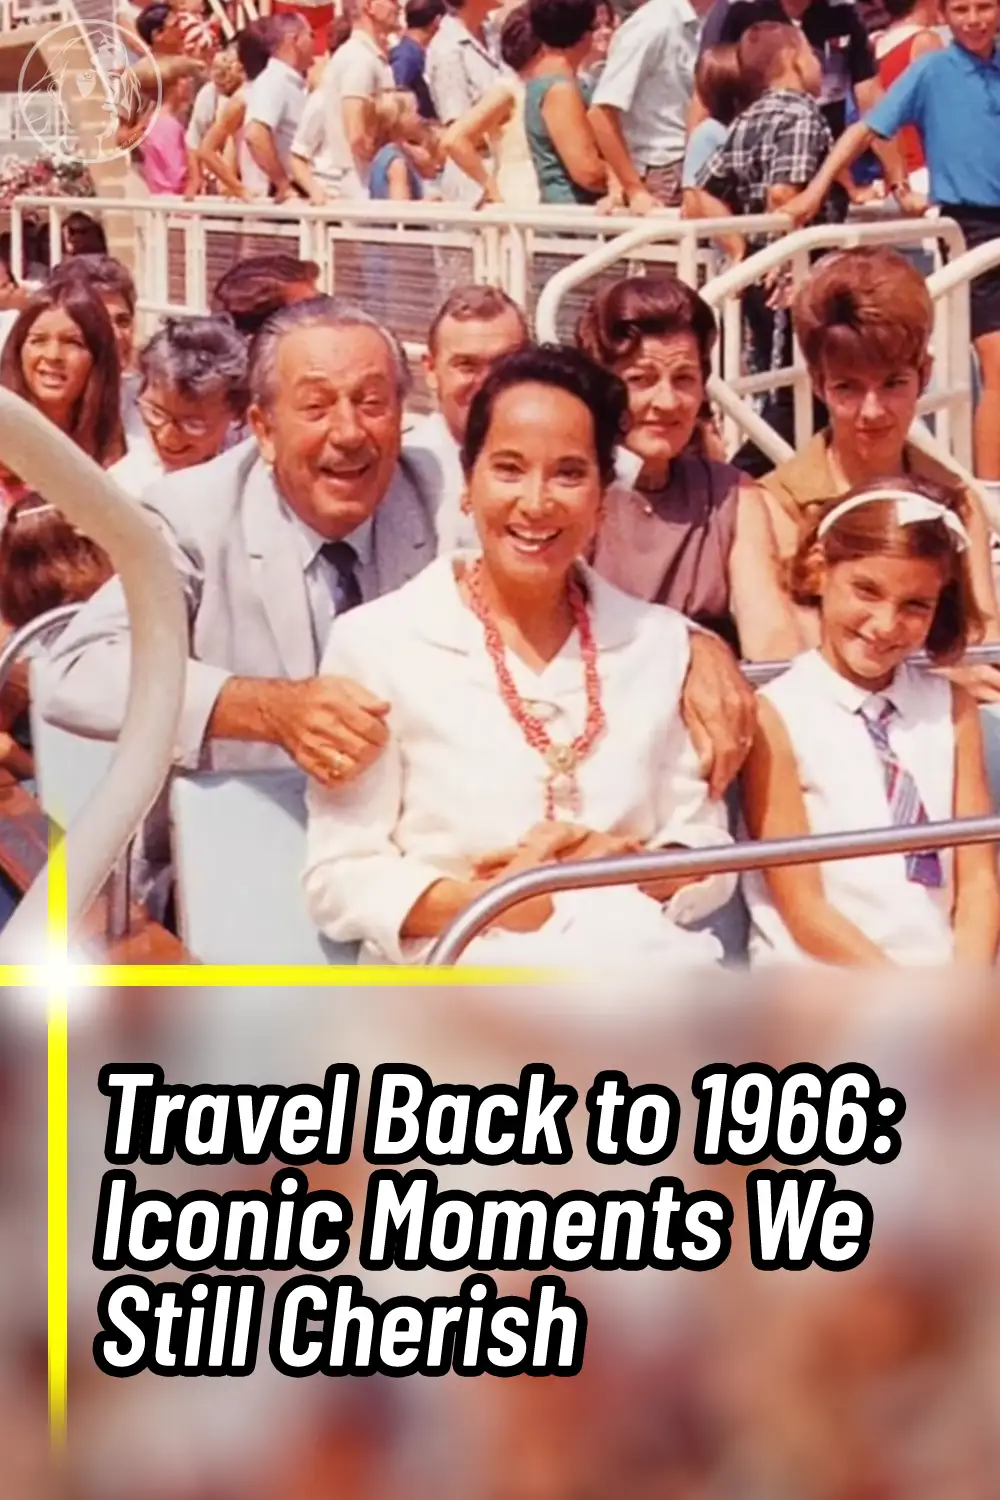 Travel Back to 1966: Iconic Moments We Still Cherish